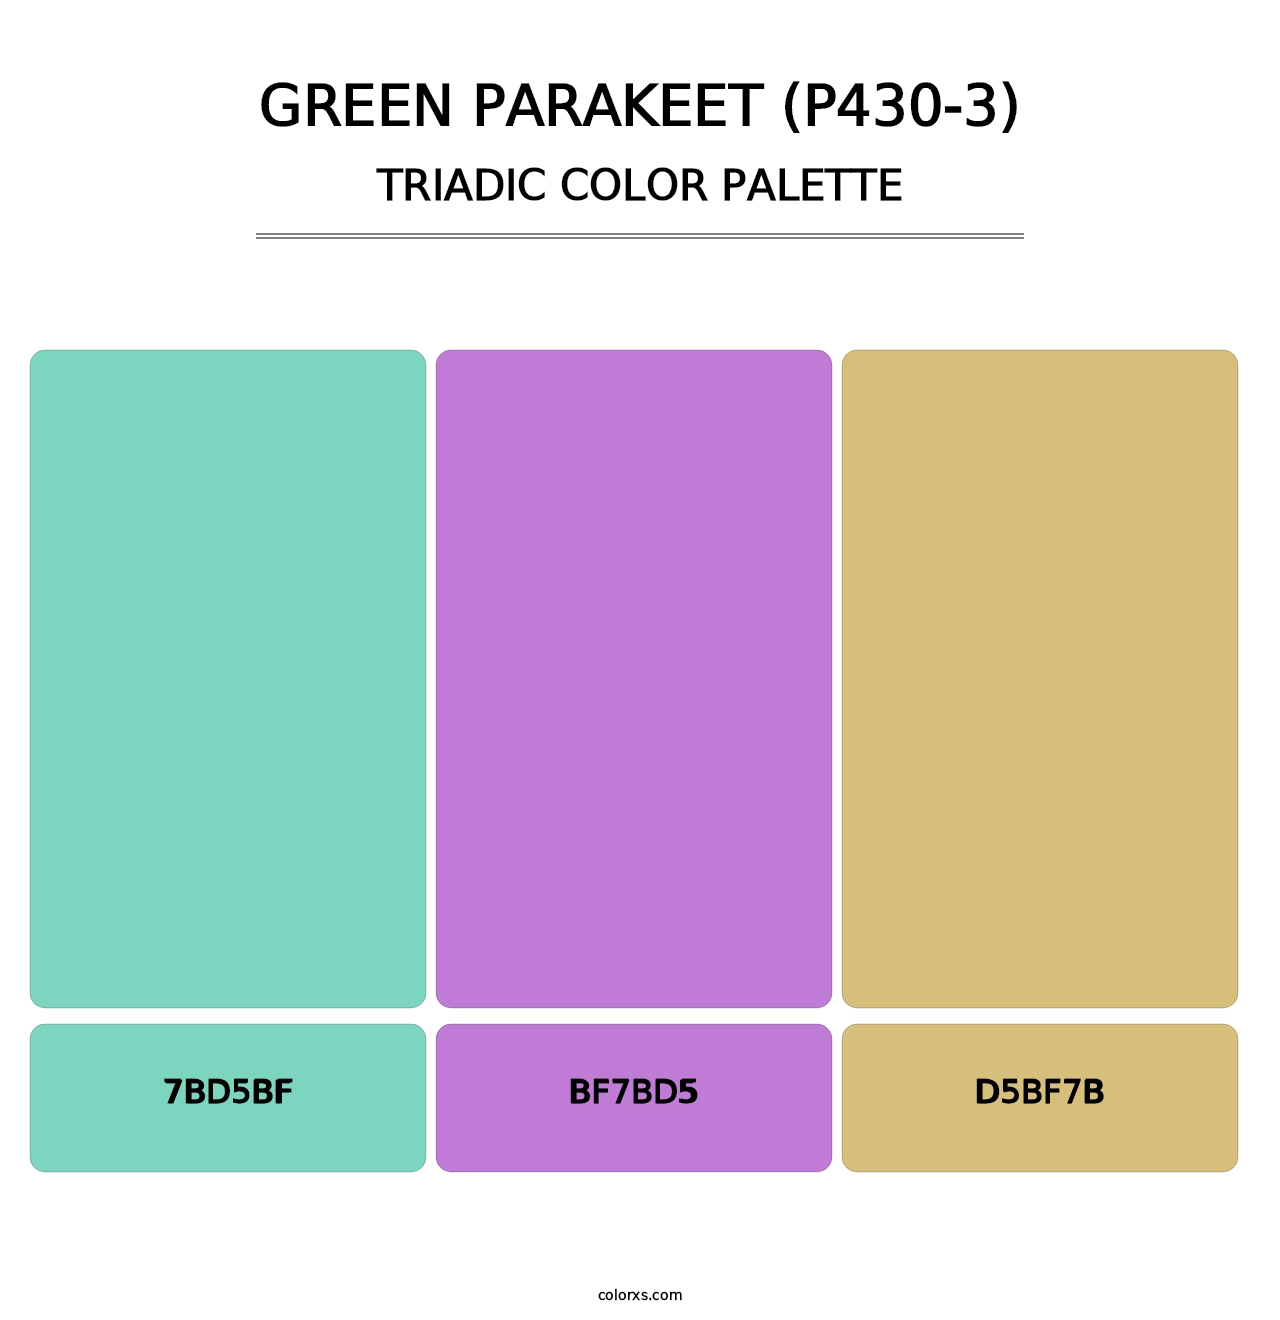 Green Parakeet (P430-3) - Triadic Color Palette